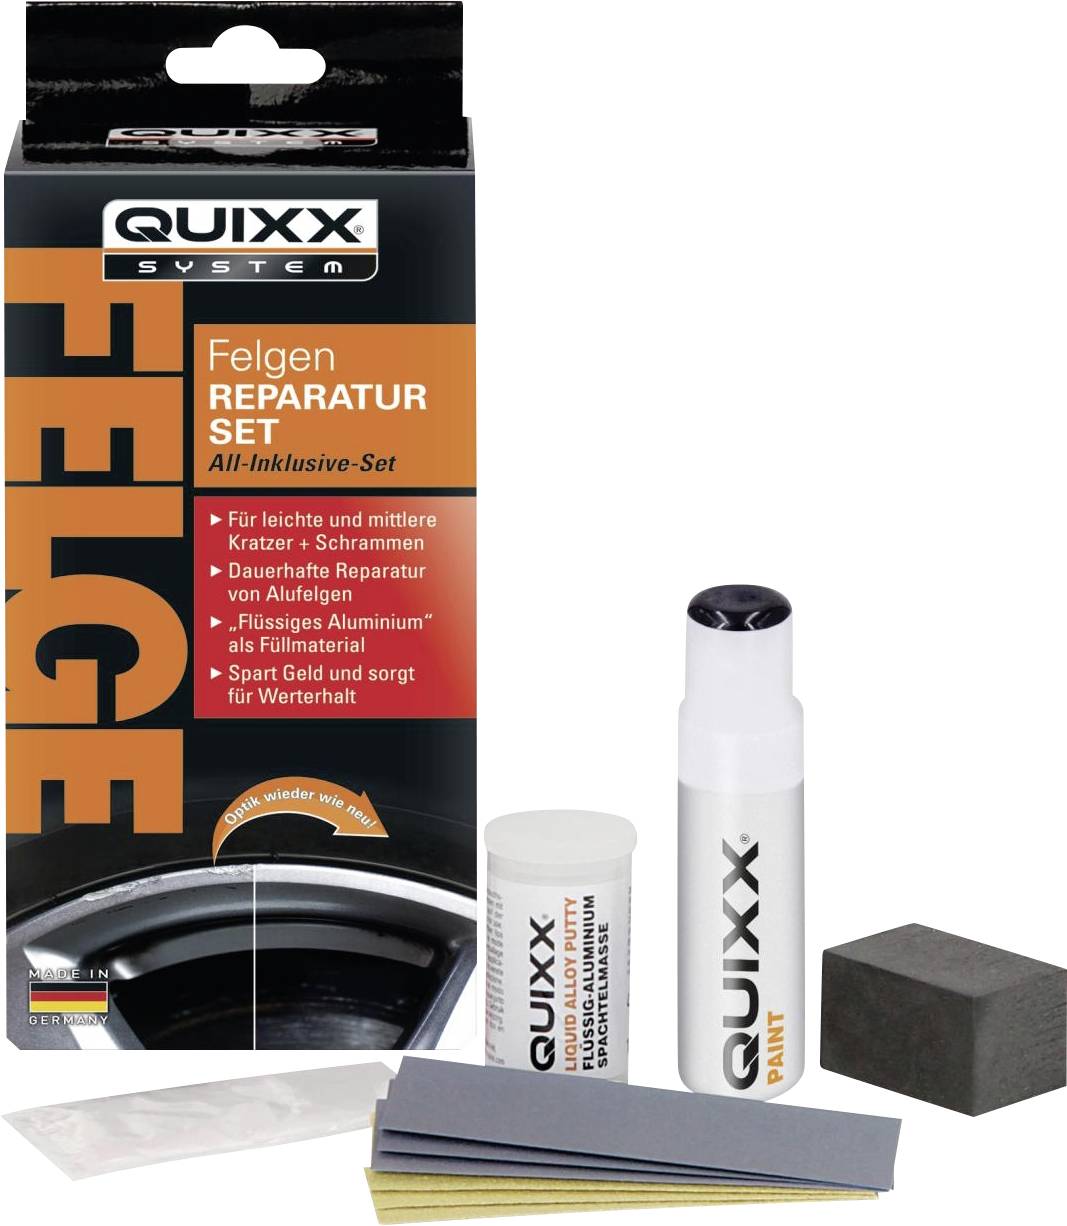 Quixx Felgen Reparatur-Set kaufen bei OBI